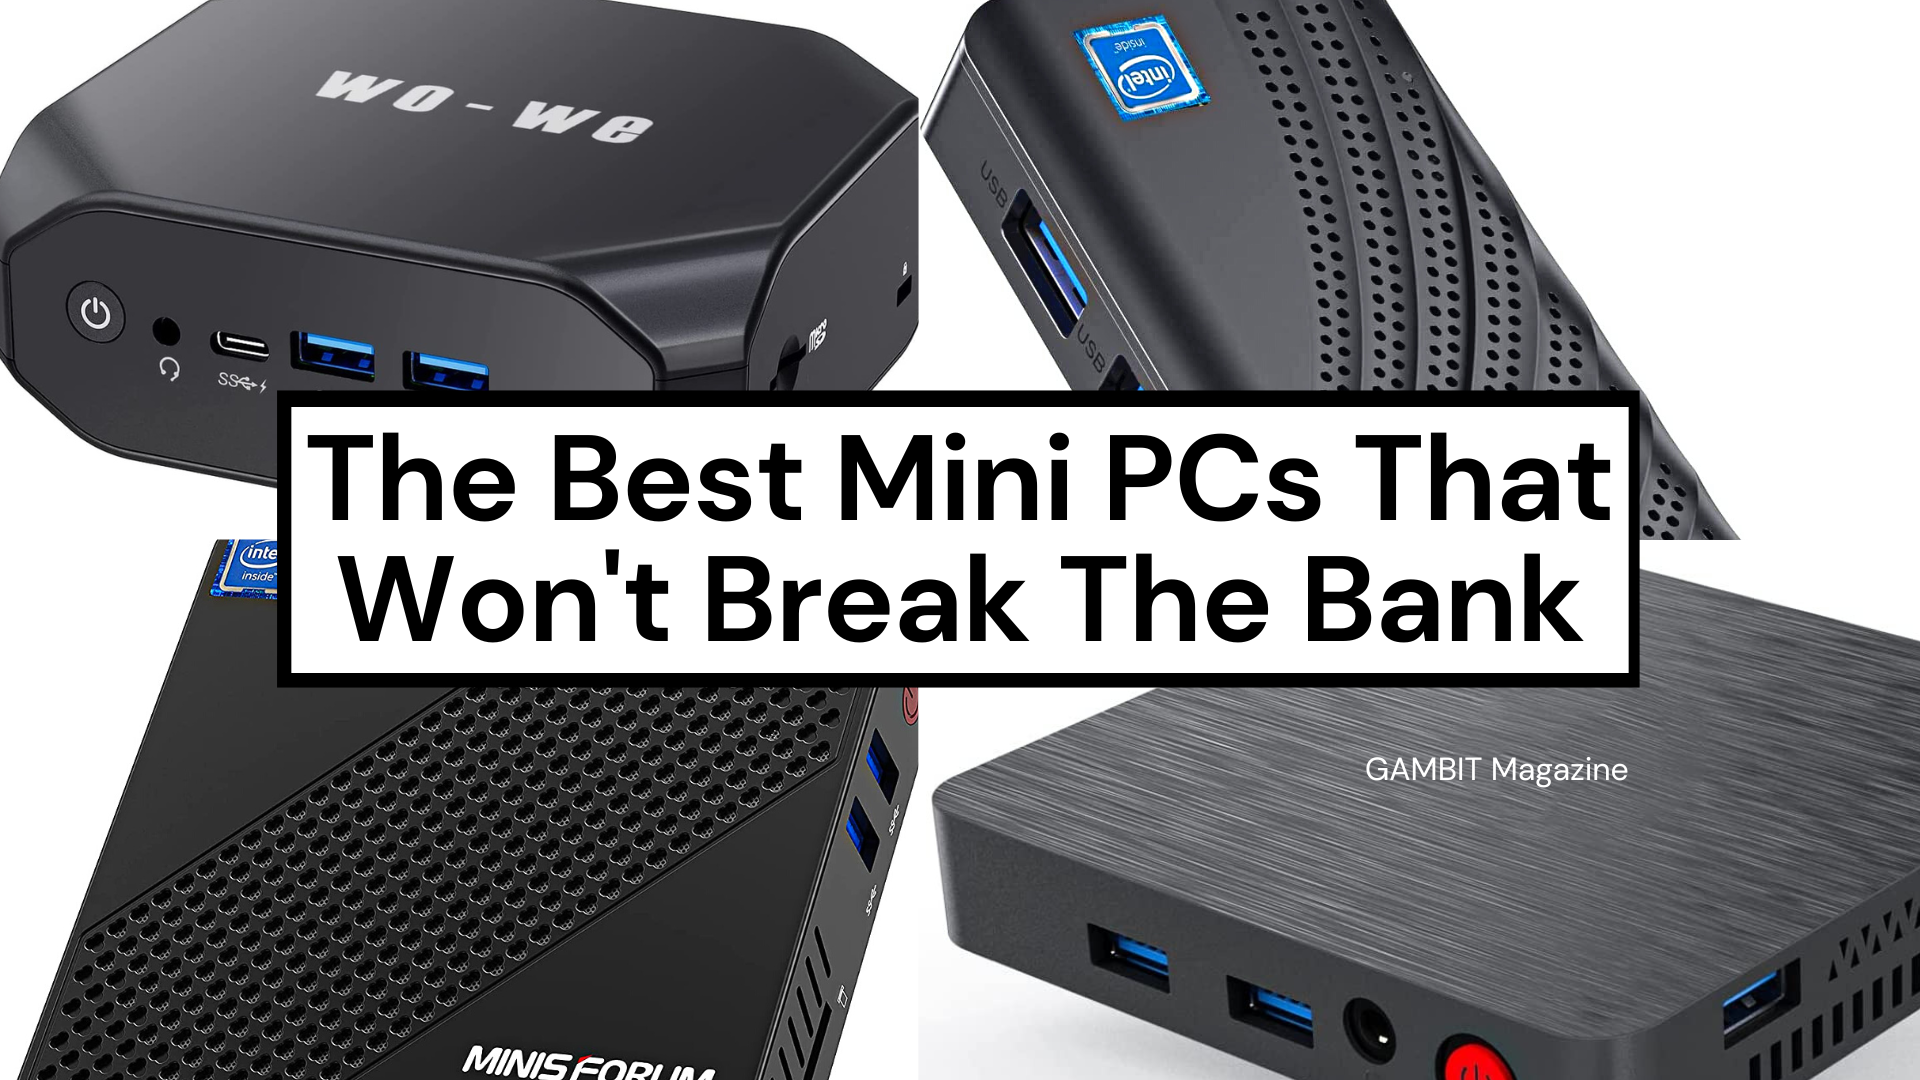 The Best Mini PCs That Won’t Break The Bank